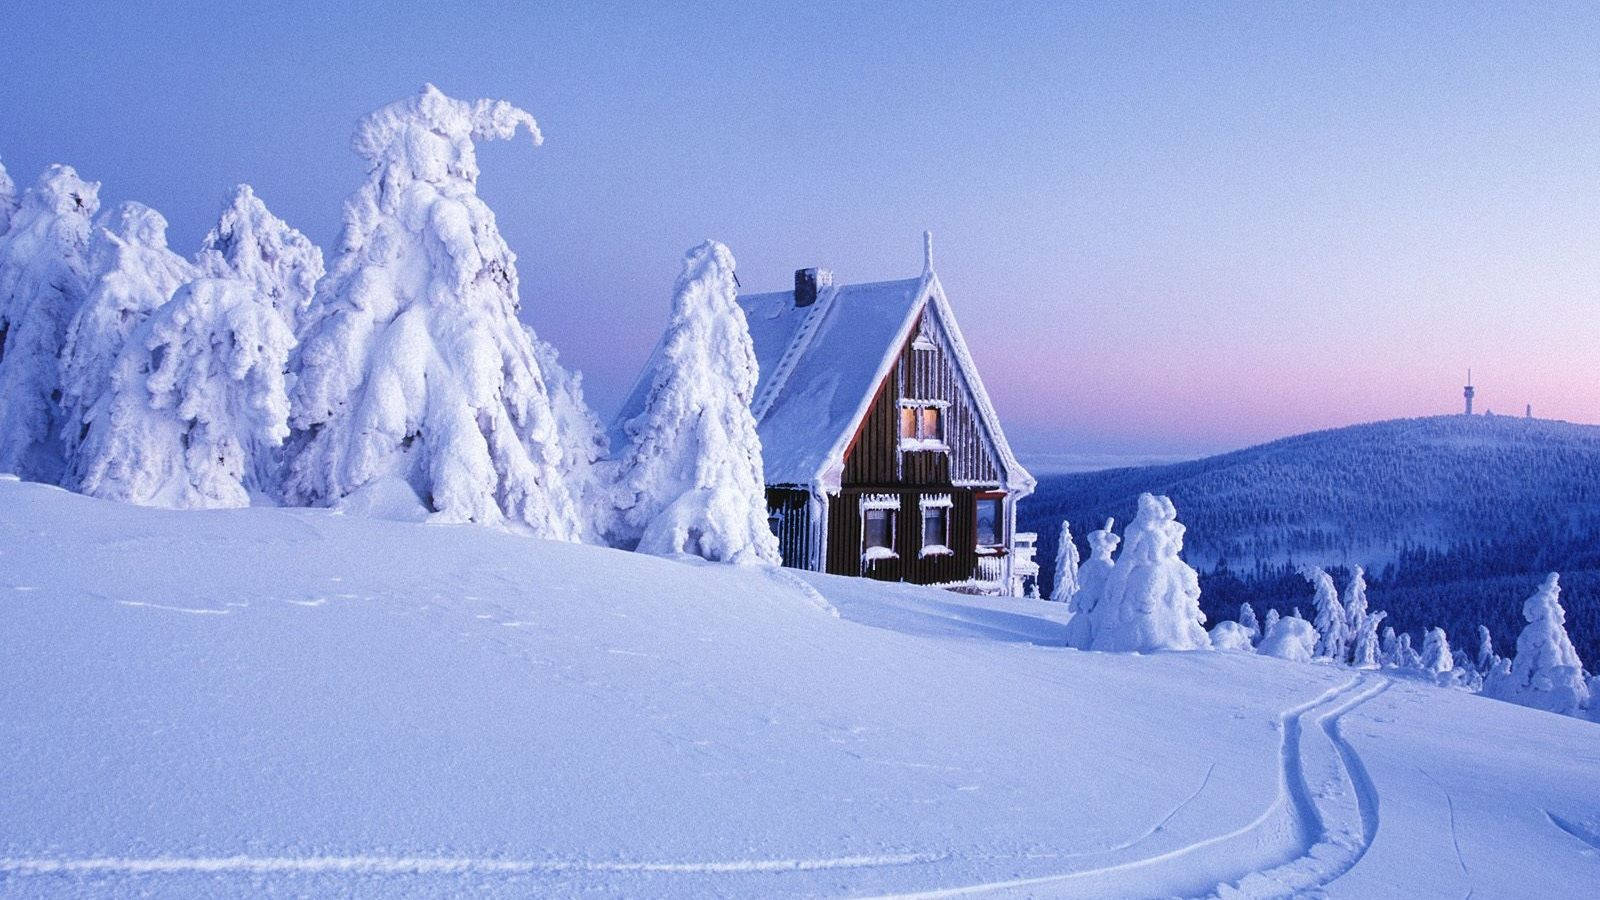 "Beautiful Winter Wonderland on Your Desktop" Wallpaper